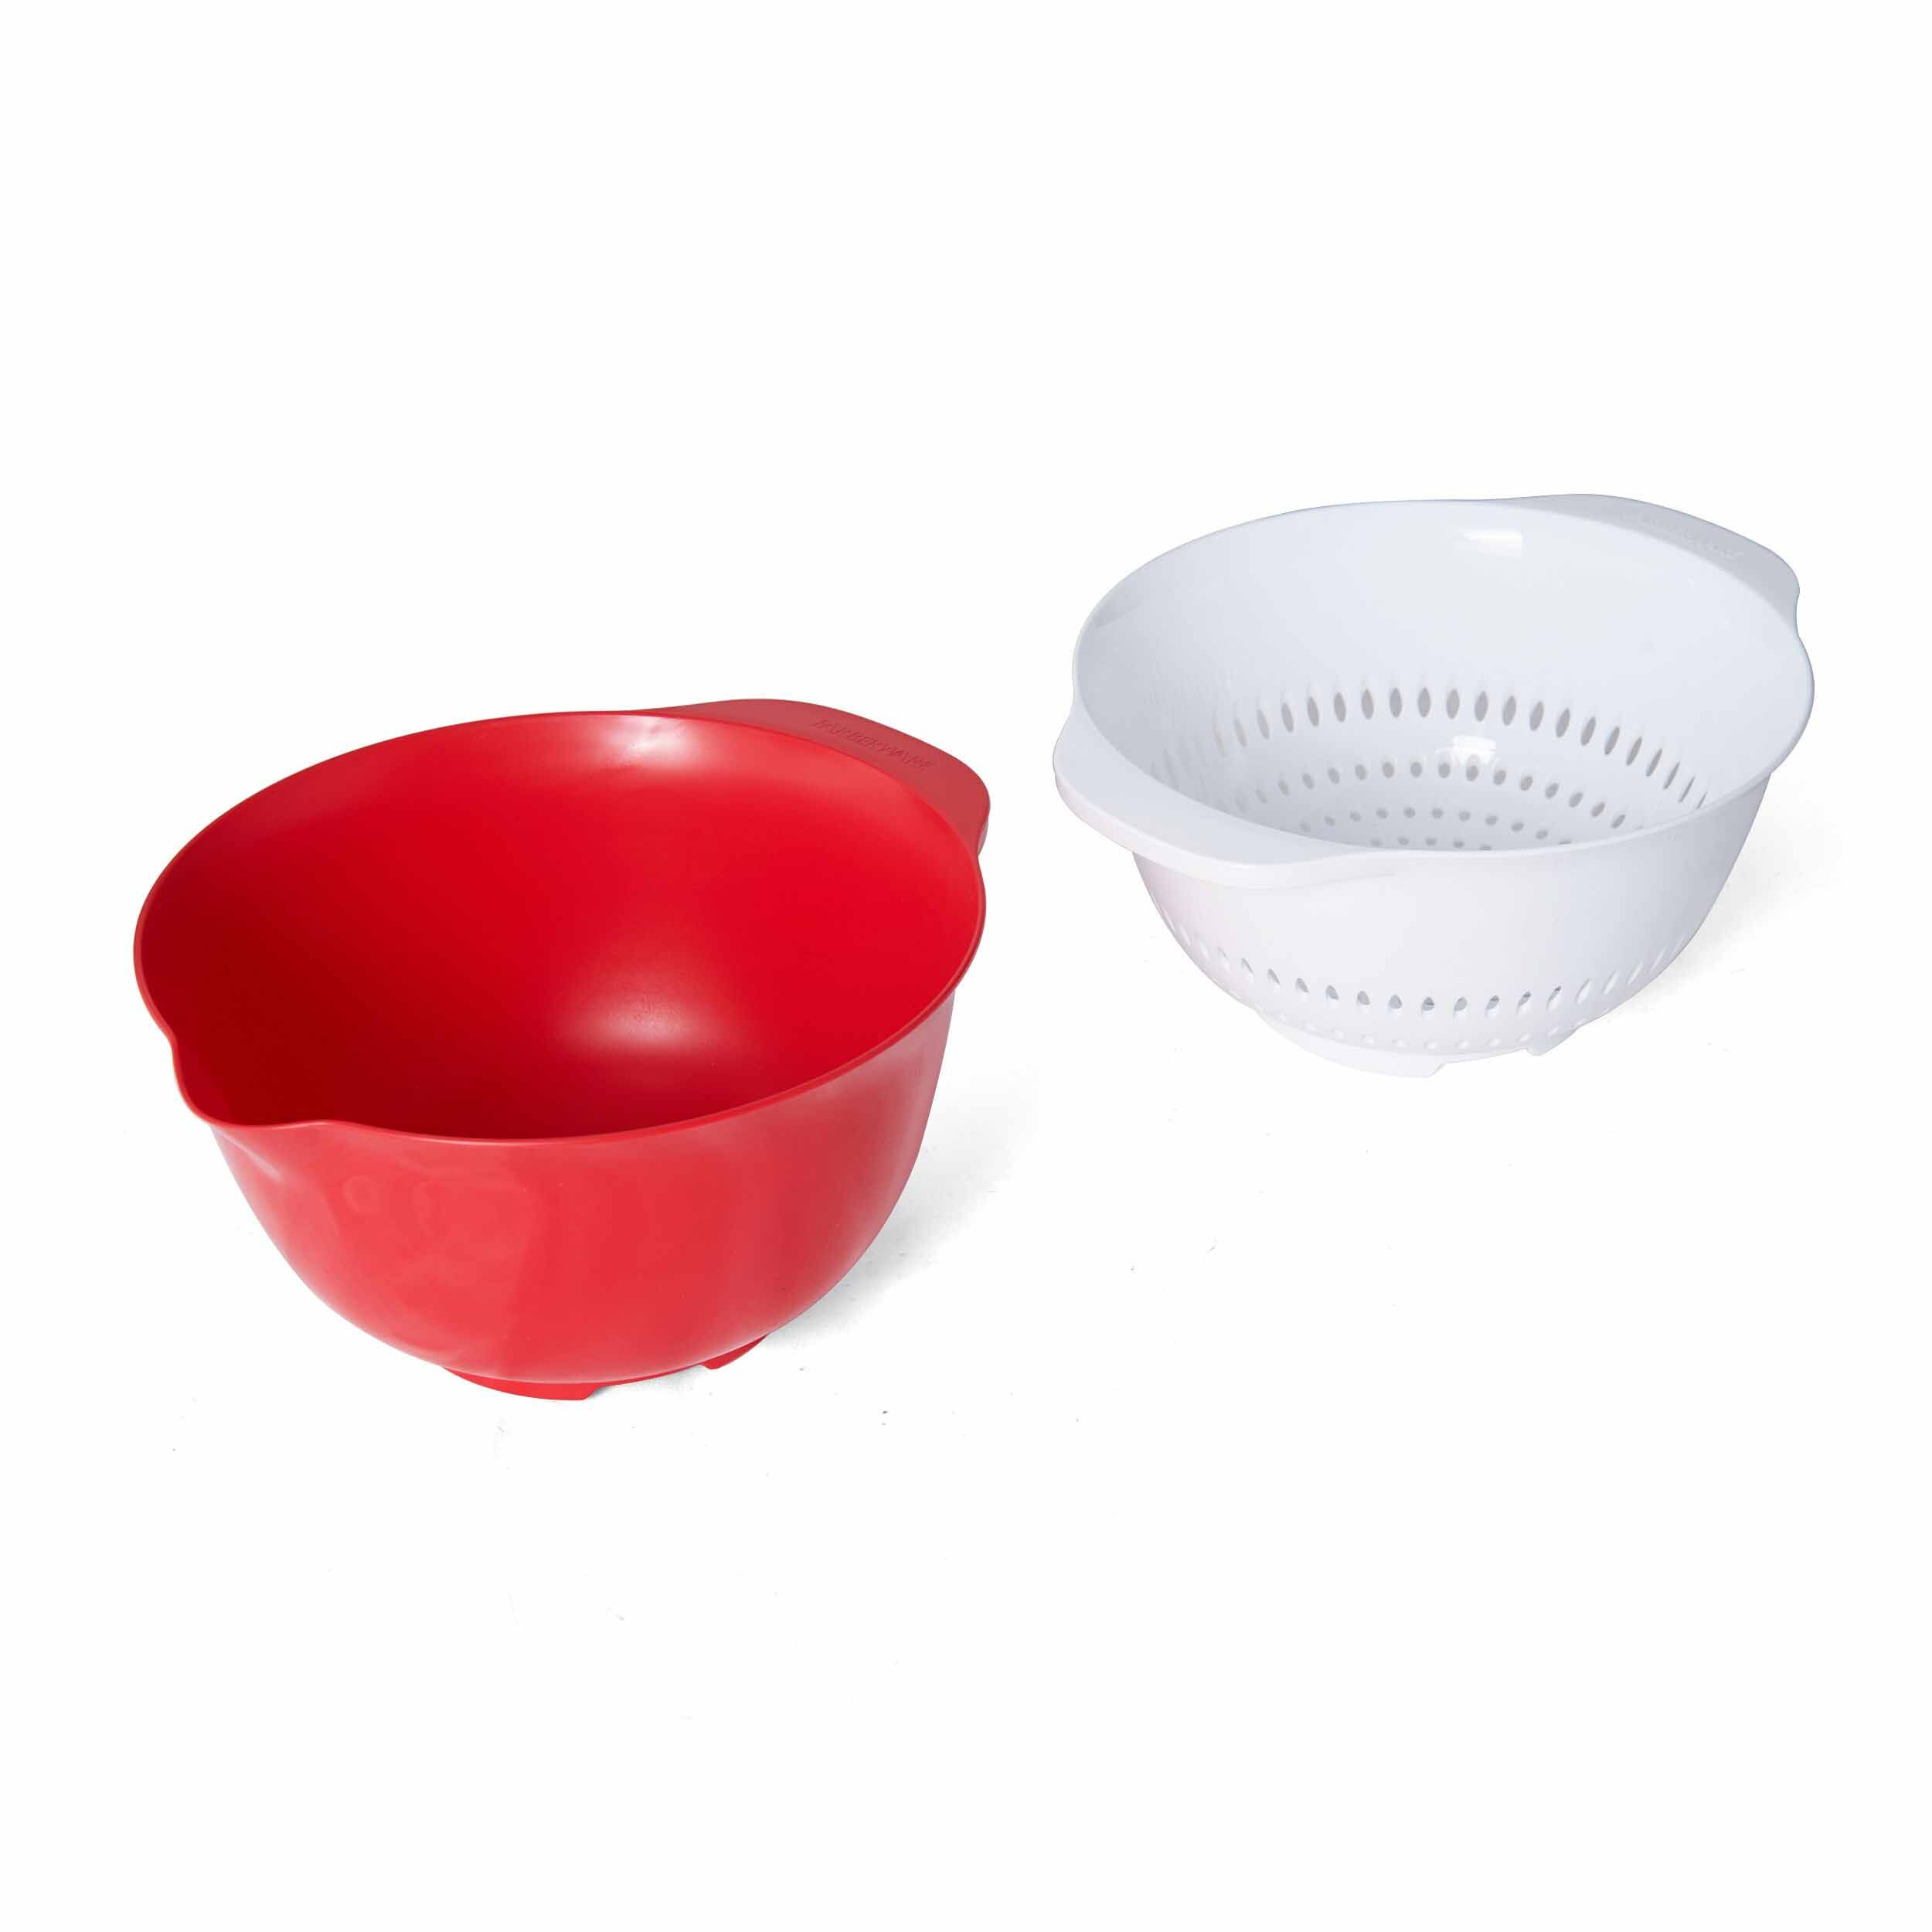 Farberware 3 Piece Classic Plastic Mixing Bowls, Small & Reviews